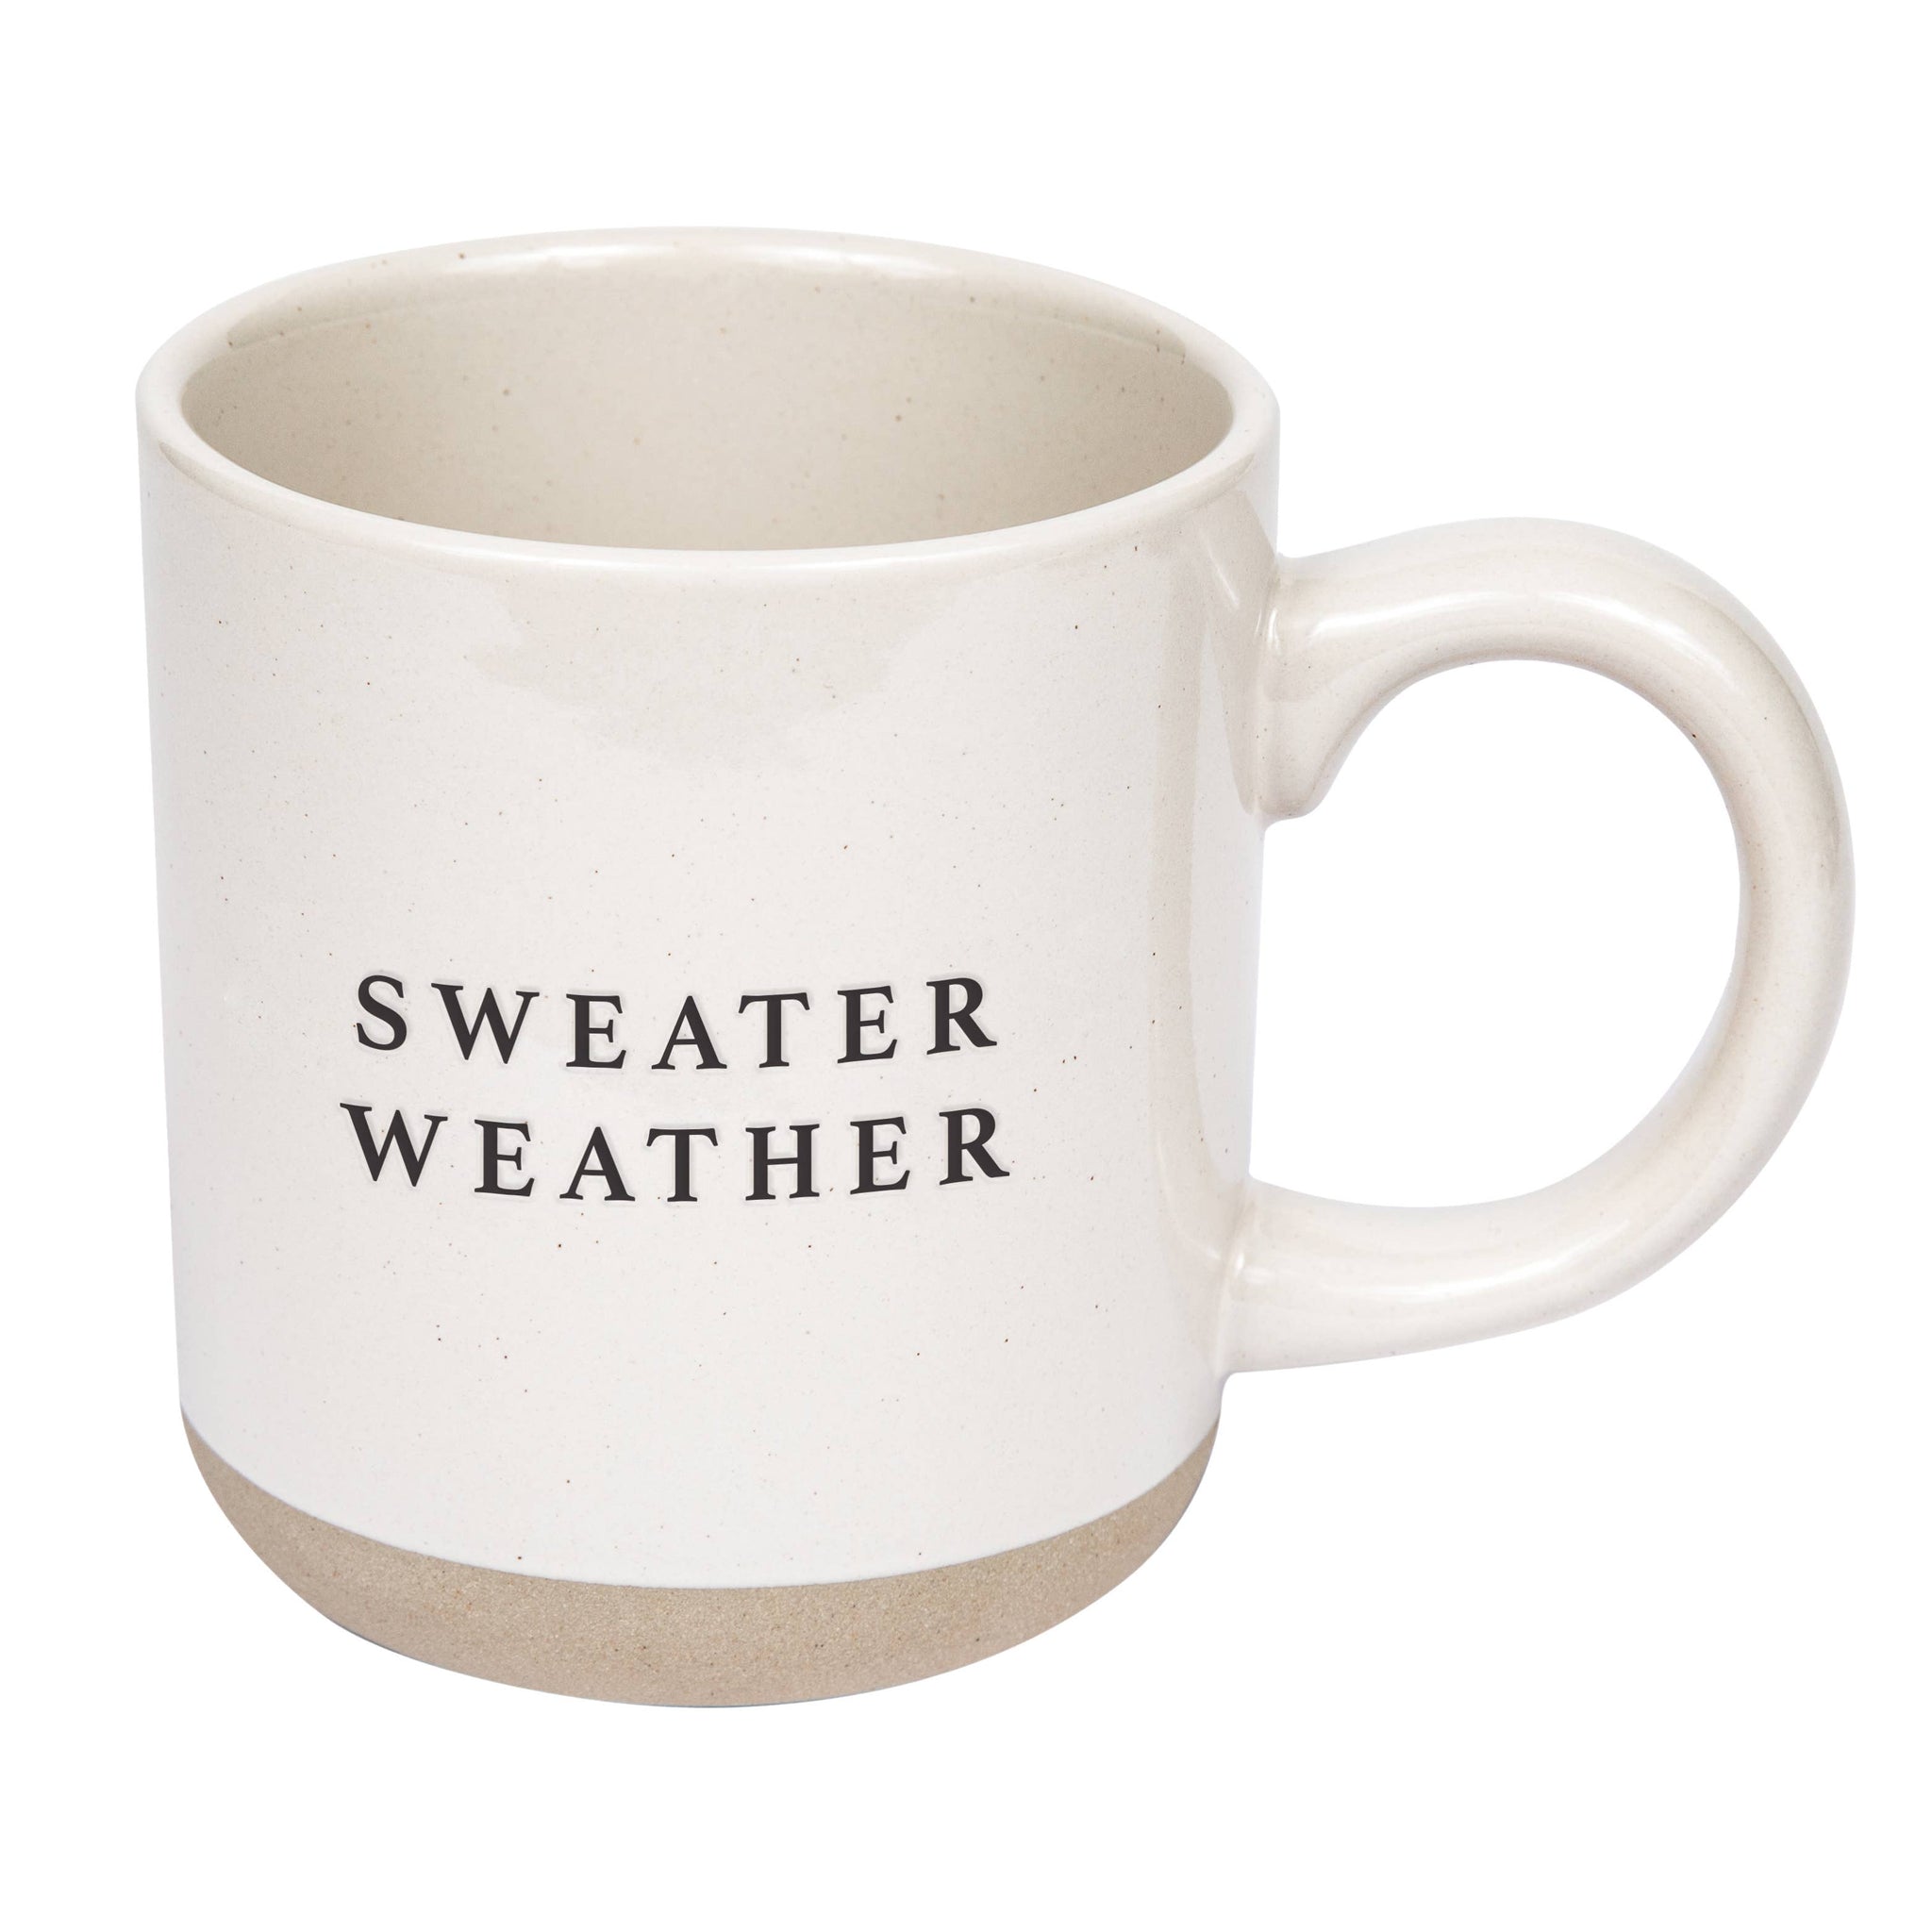 Sweater Weather Stoneware Coffee Mug - Christmas Home Gifts